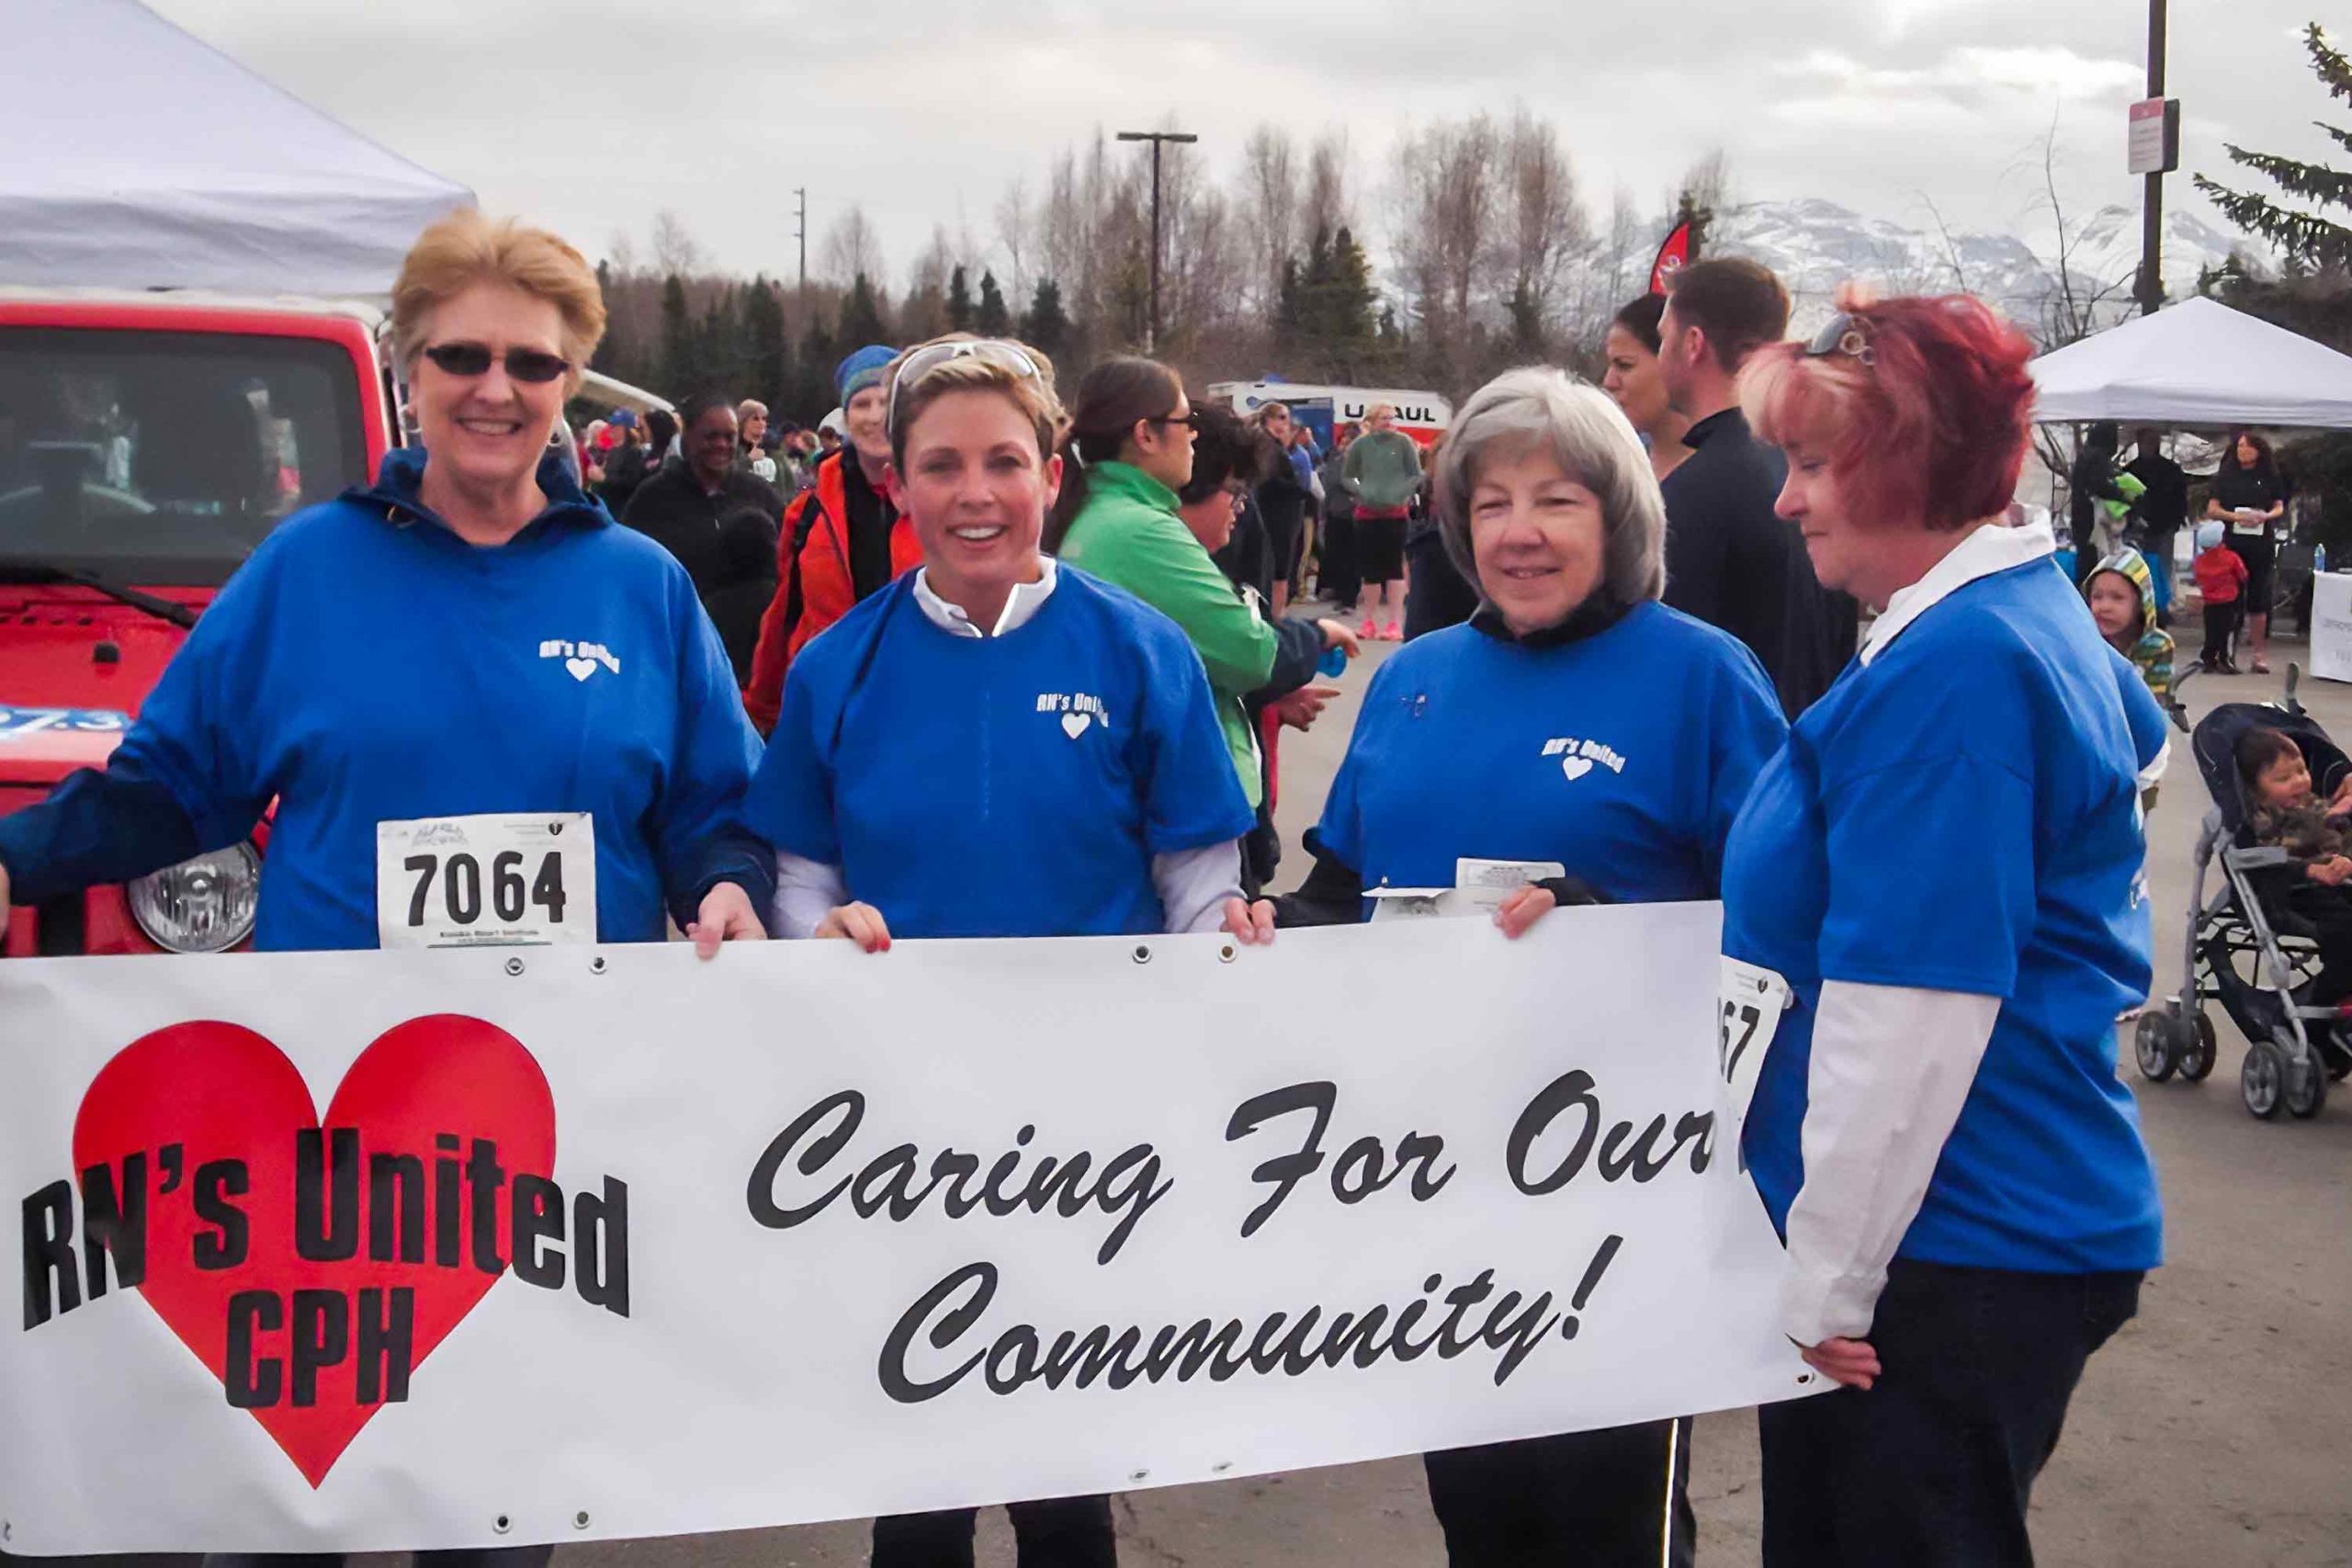 nurses supporting community running event